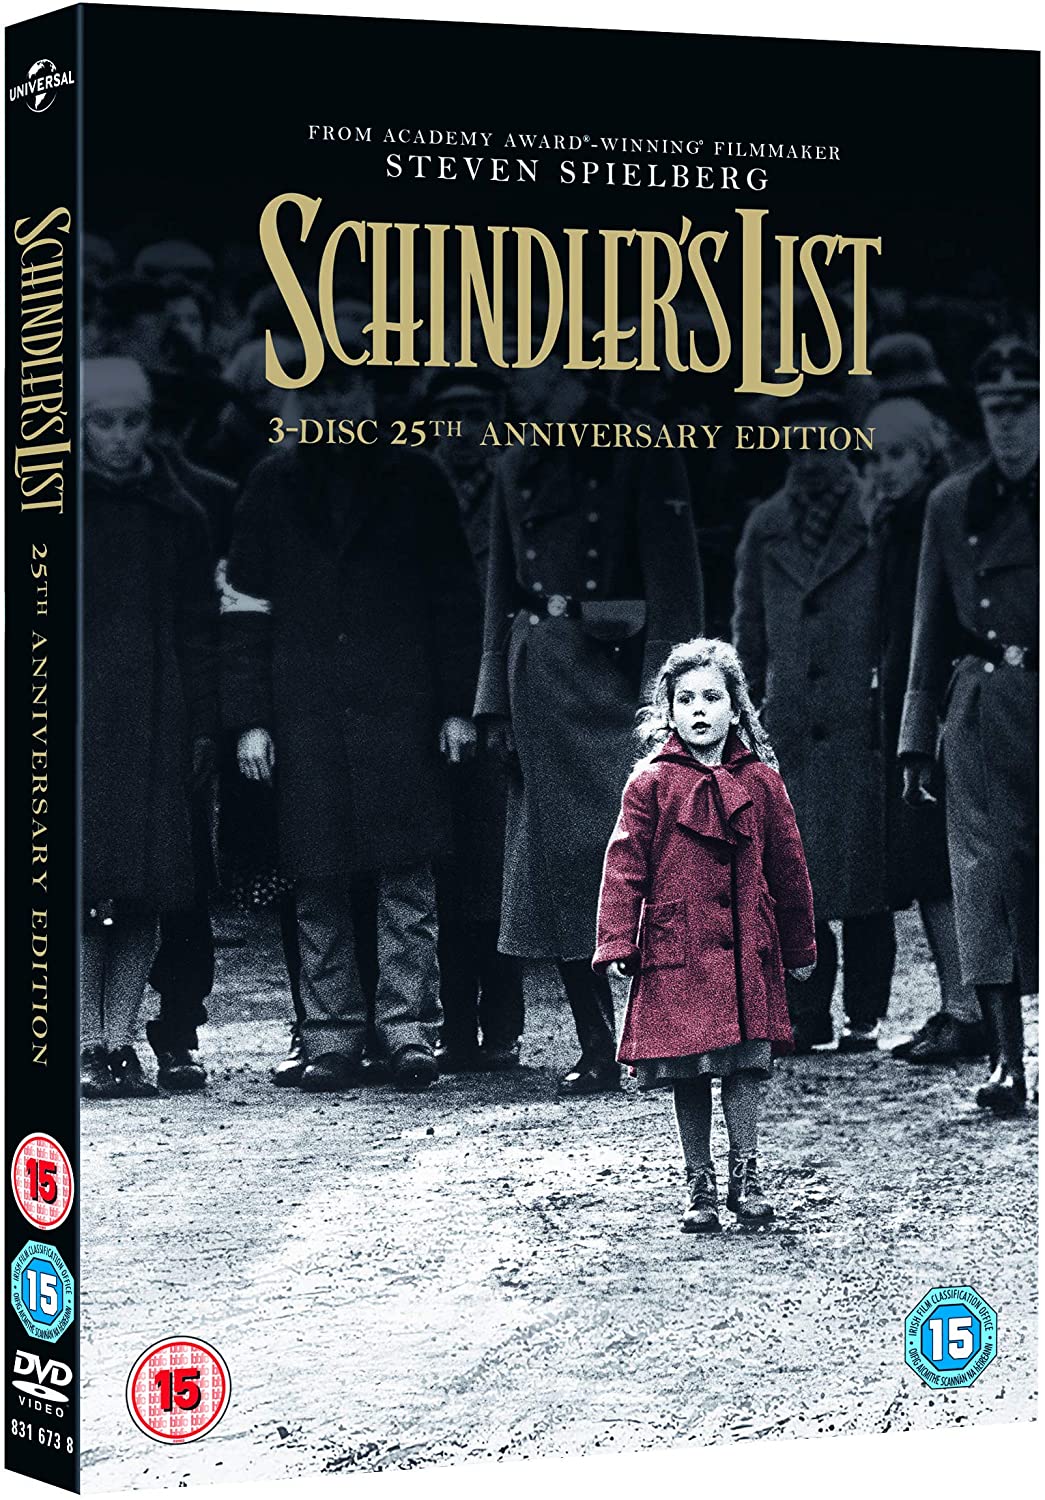 Schindlers List [25th Anniversary] [1994] (DVD)